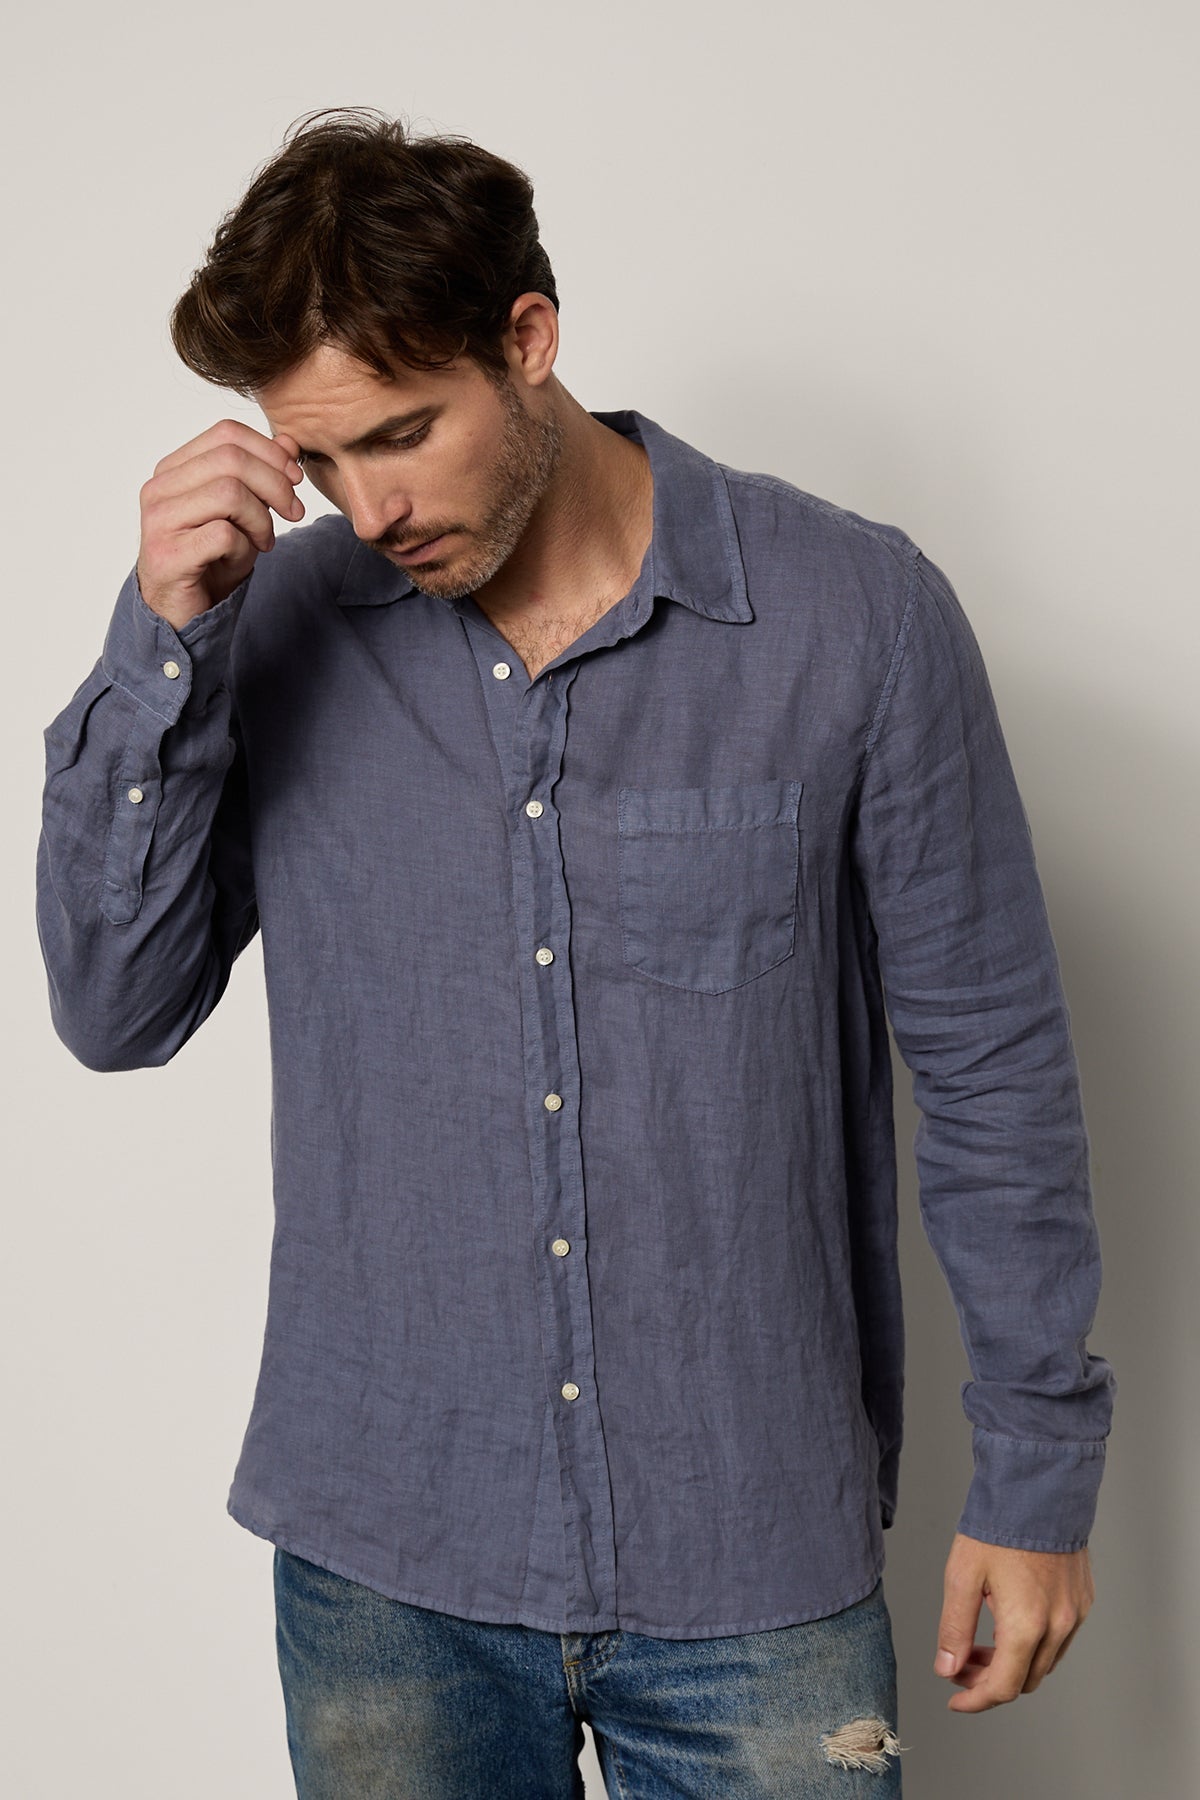   Benton Button-Up Shirt in baltic blue linen with worn denim front 